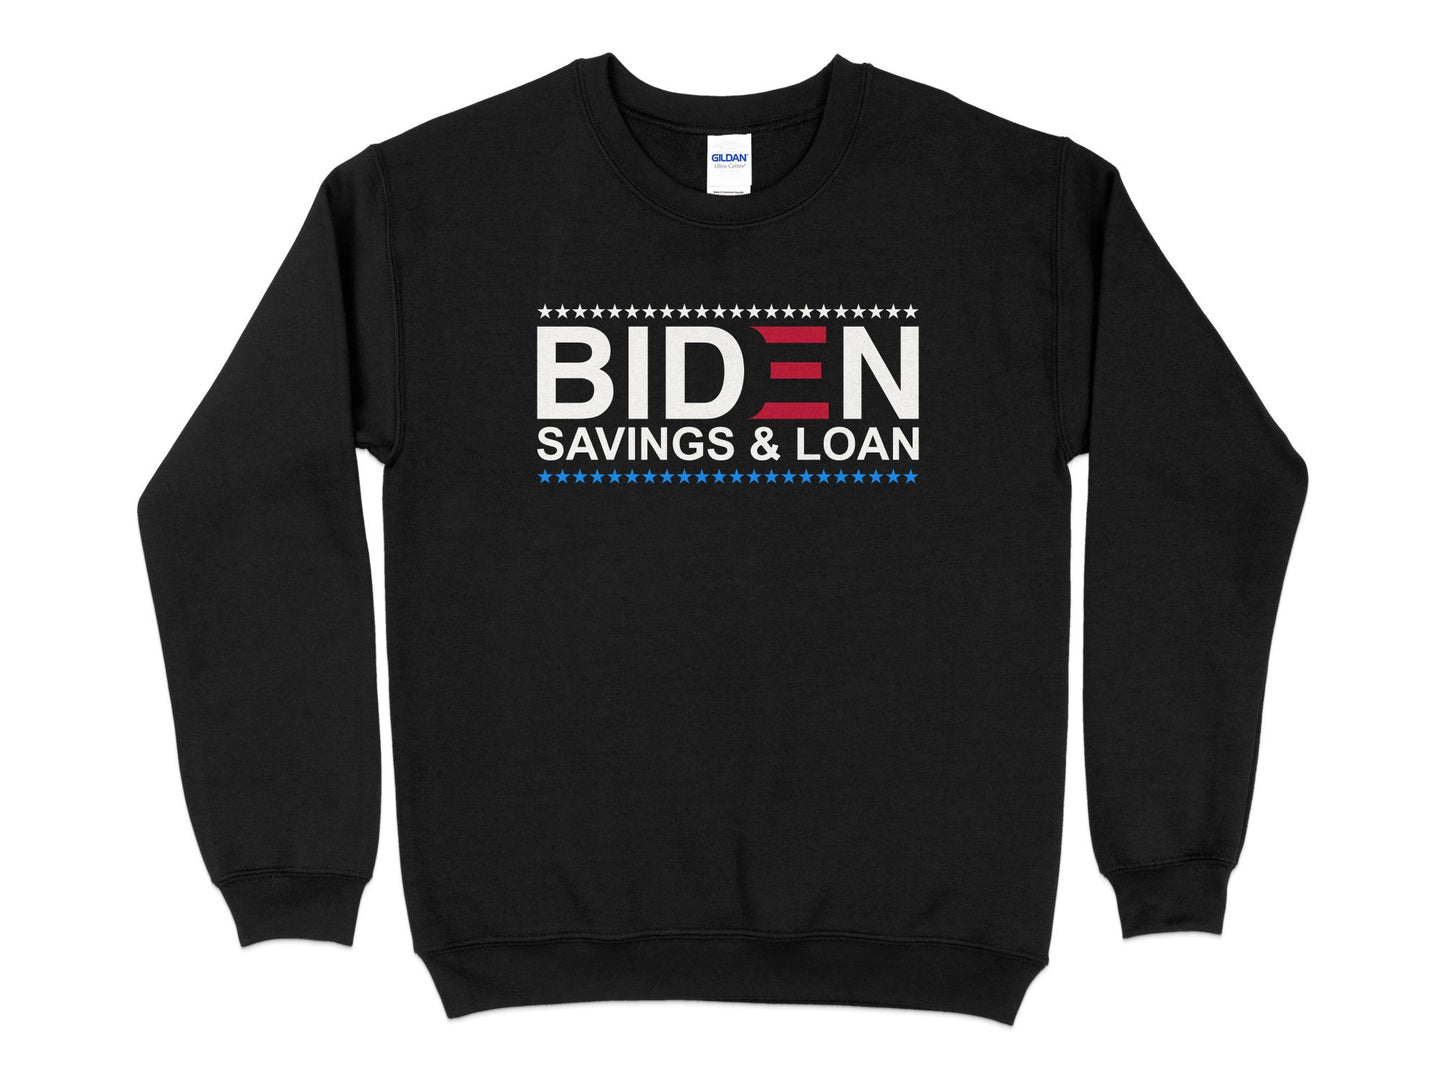 Joe Biden Sweatshirt - Savings and Loan, black